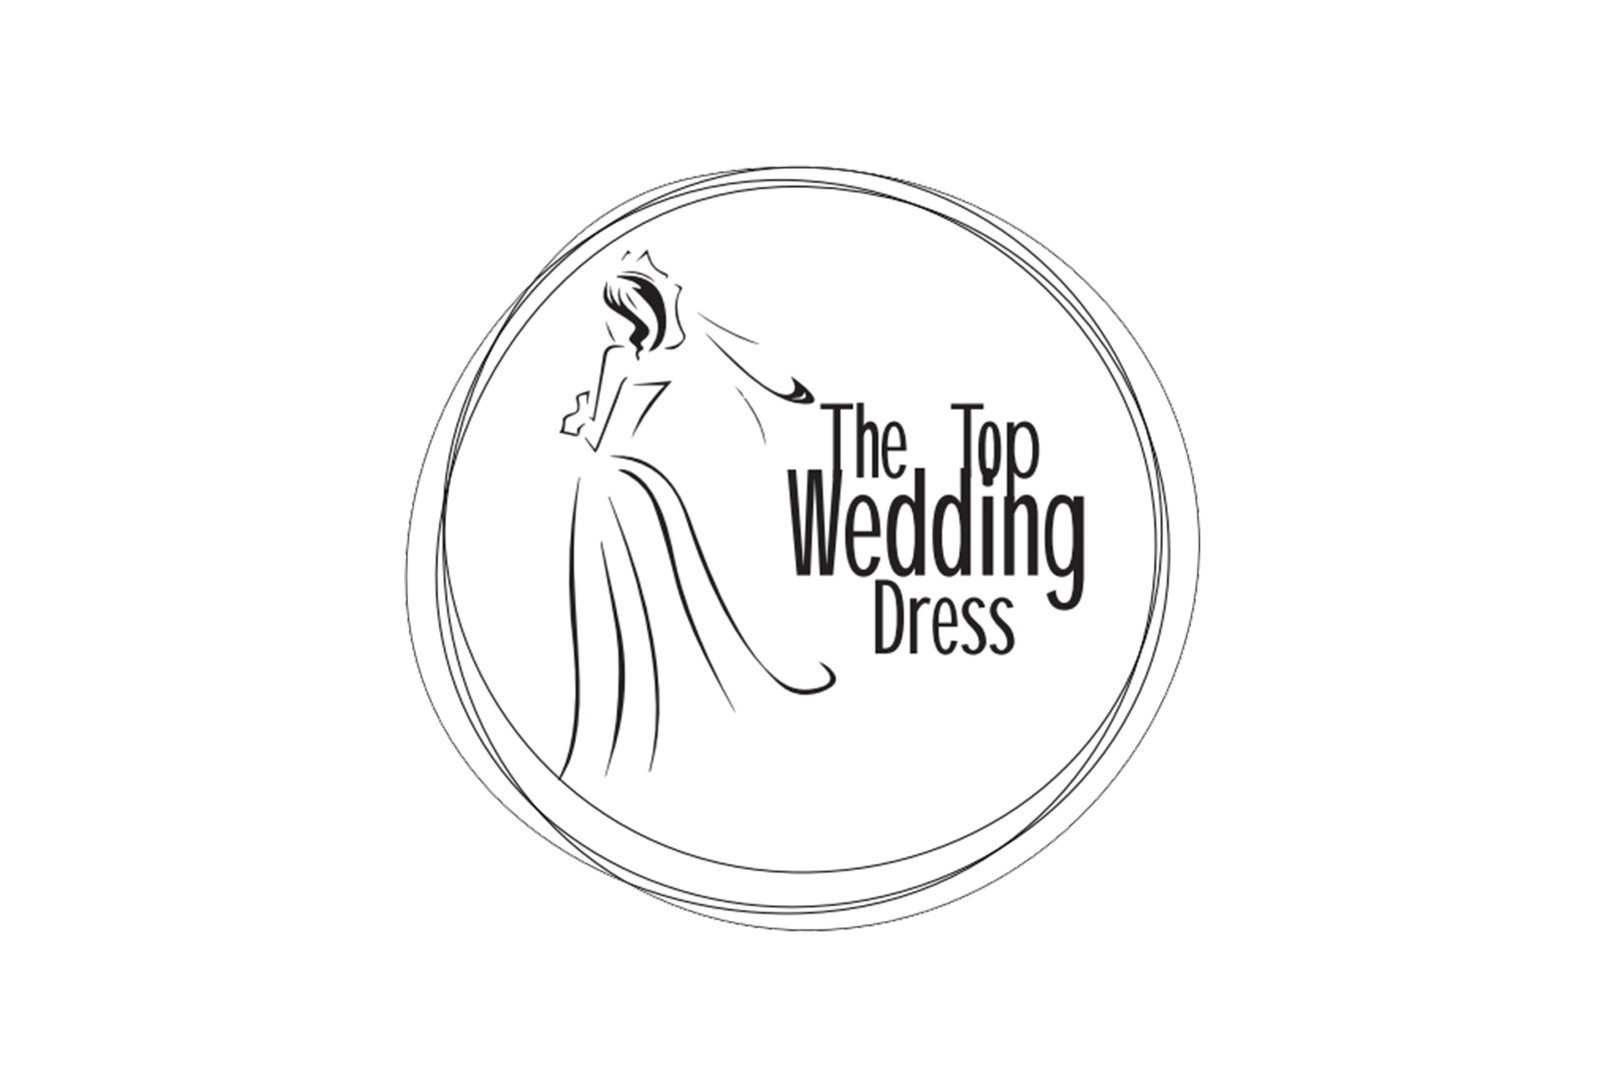 The Top Wedding Dress